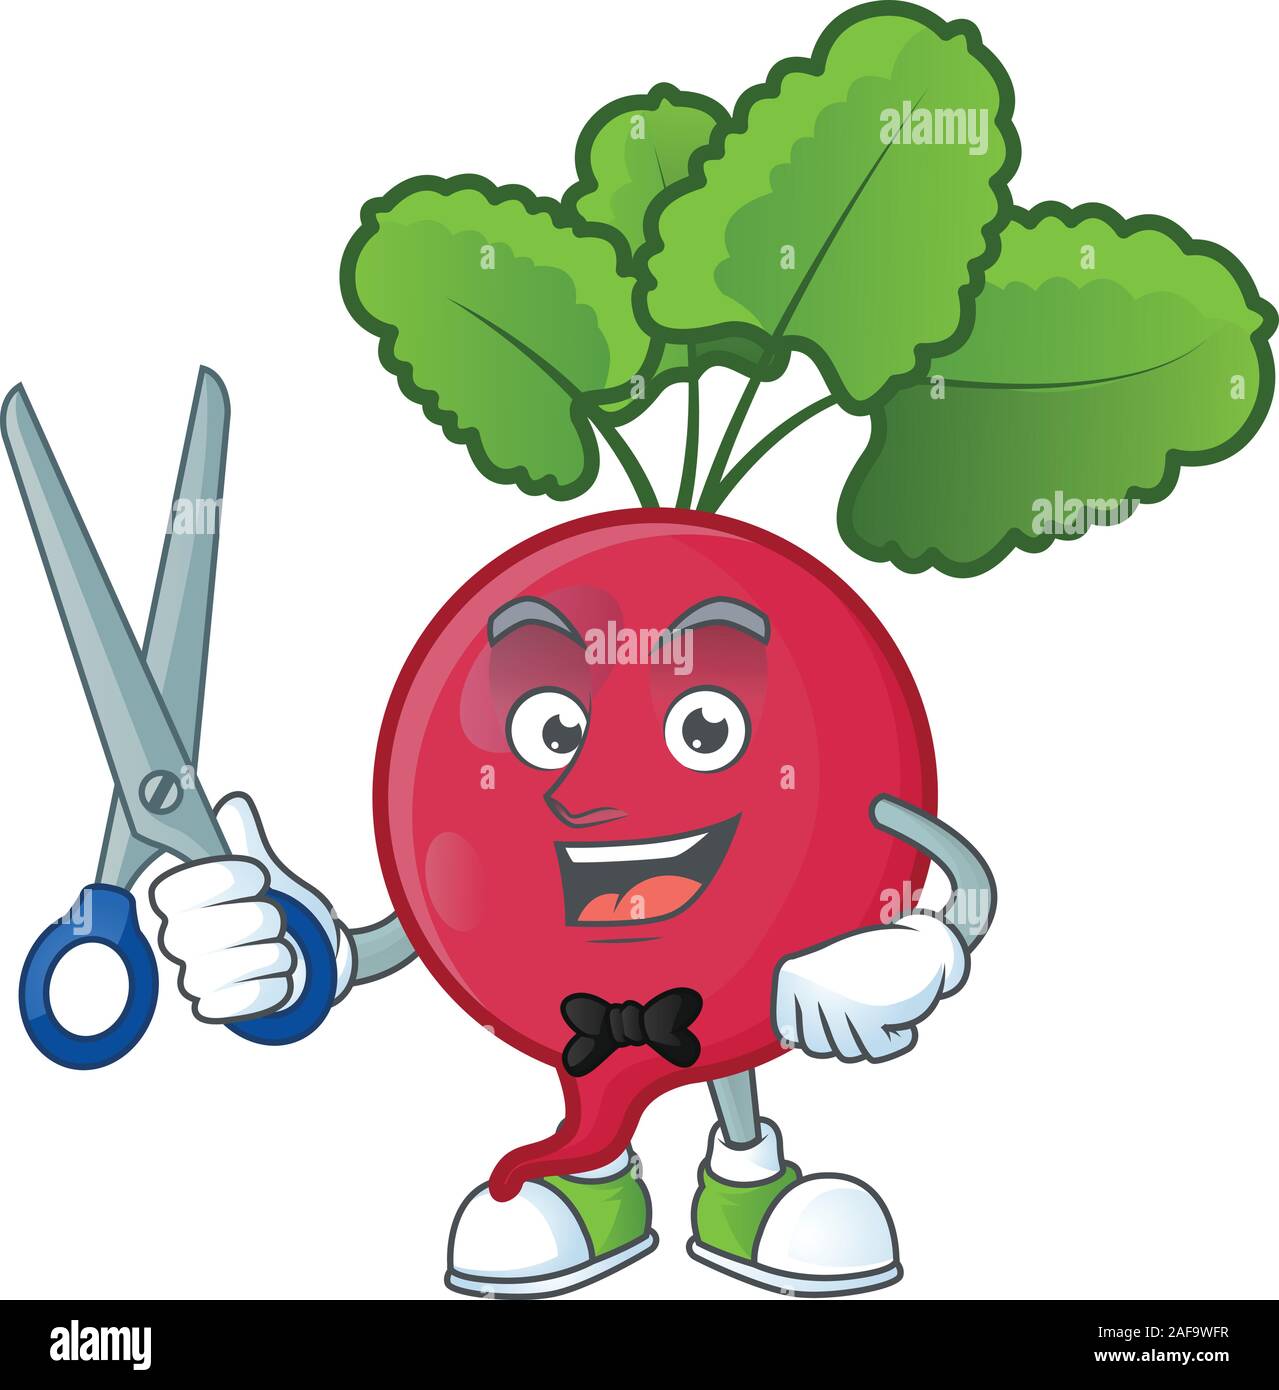 Smiley barber red radish mascot cartoon character design Stock Vector